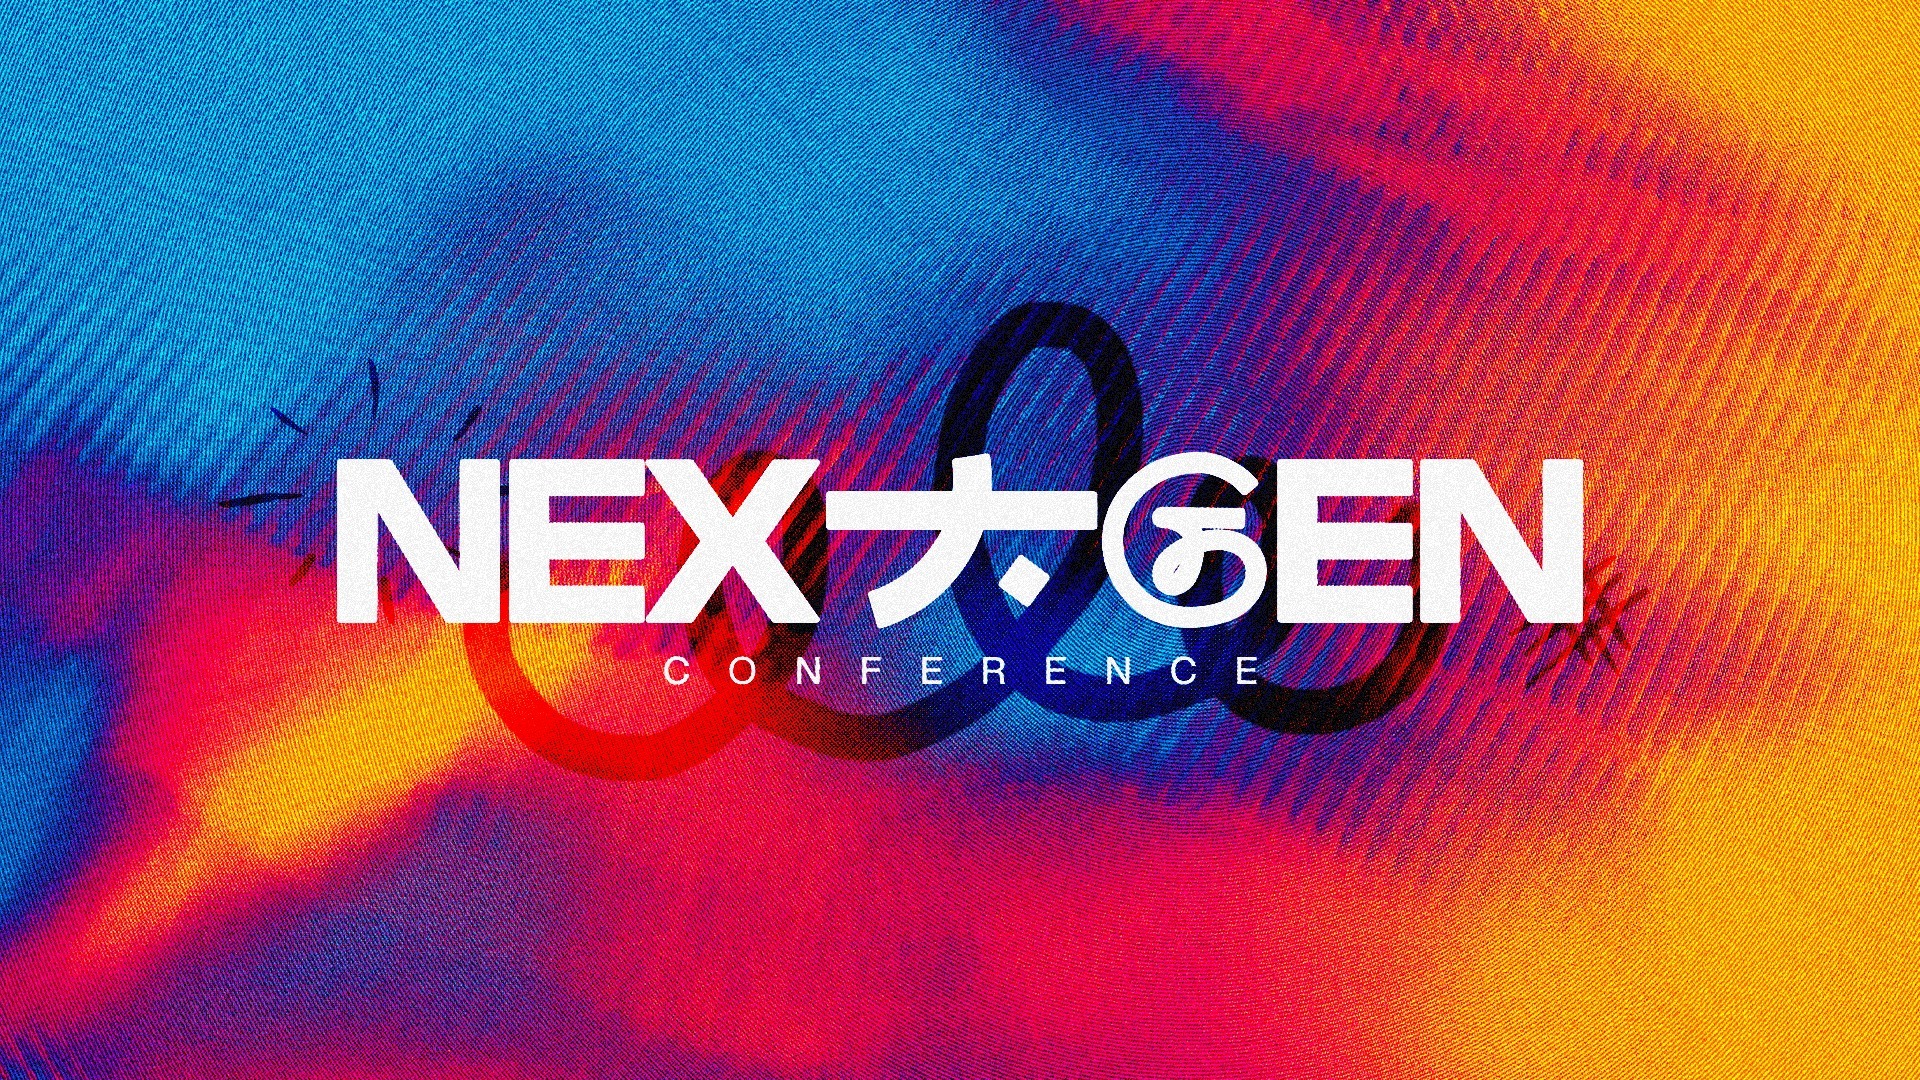 Next Gen Conference Graphics